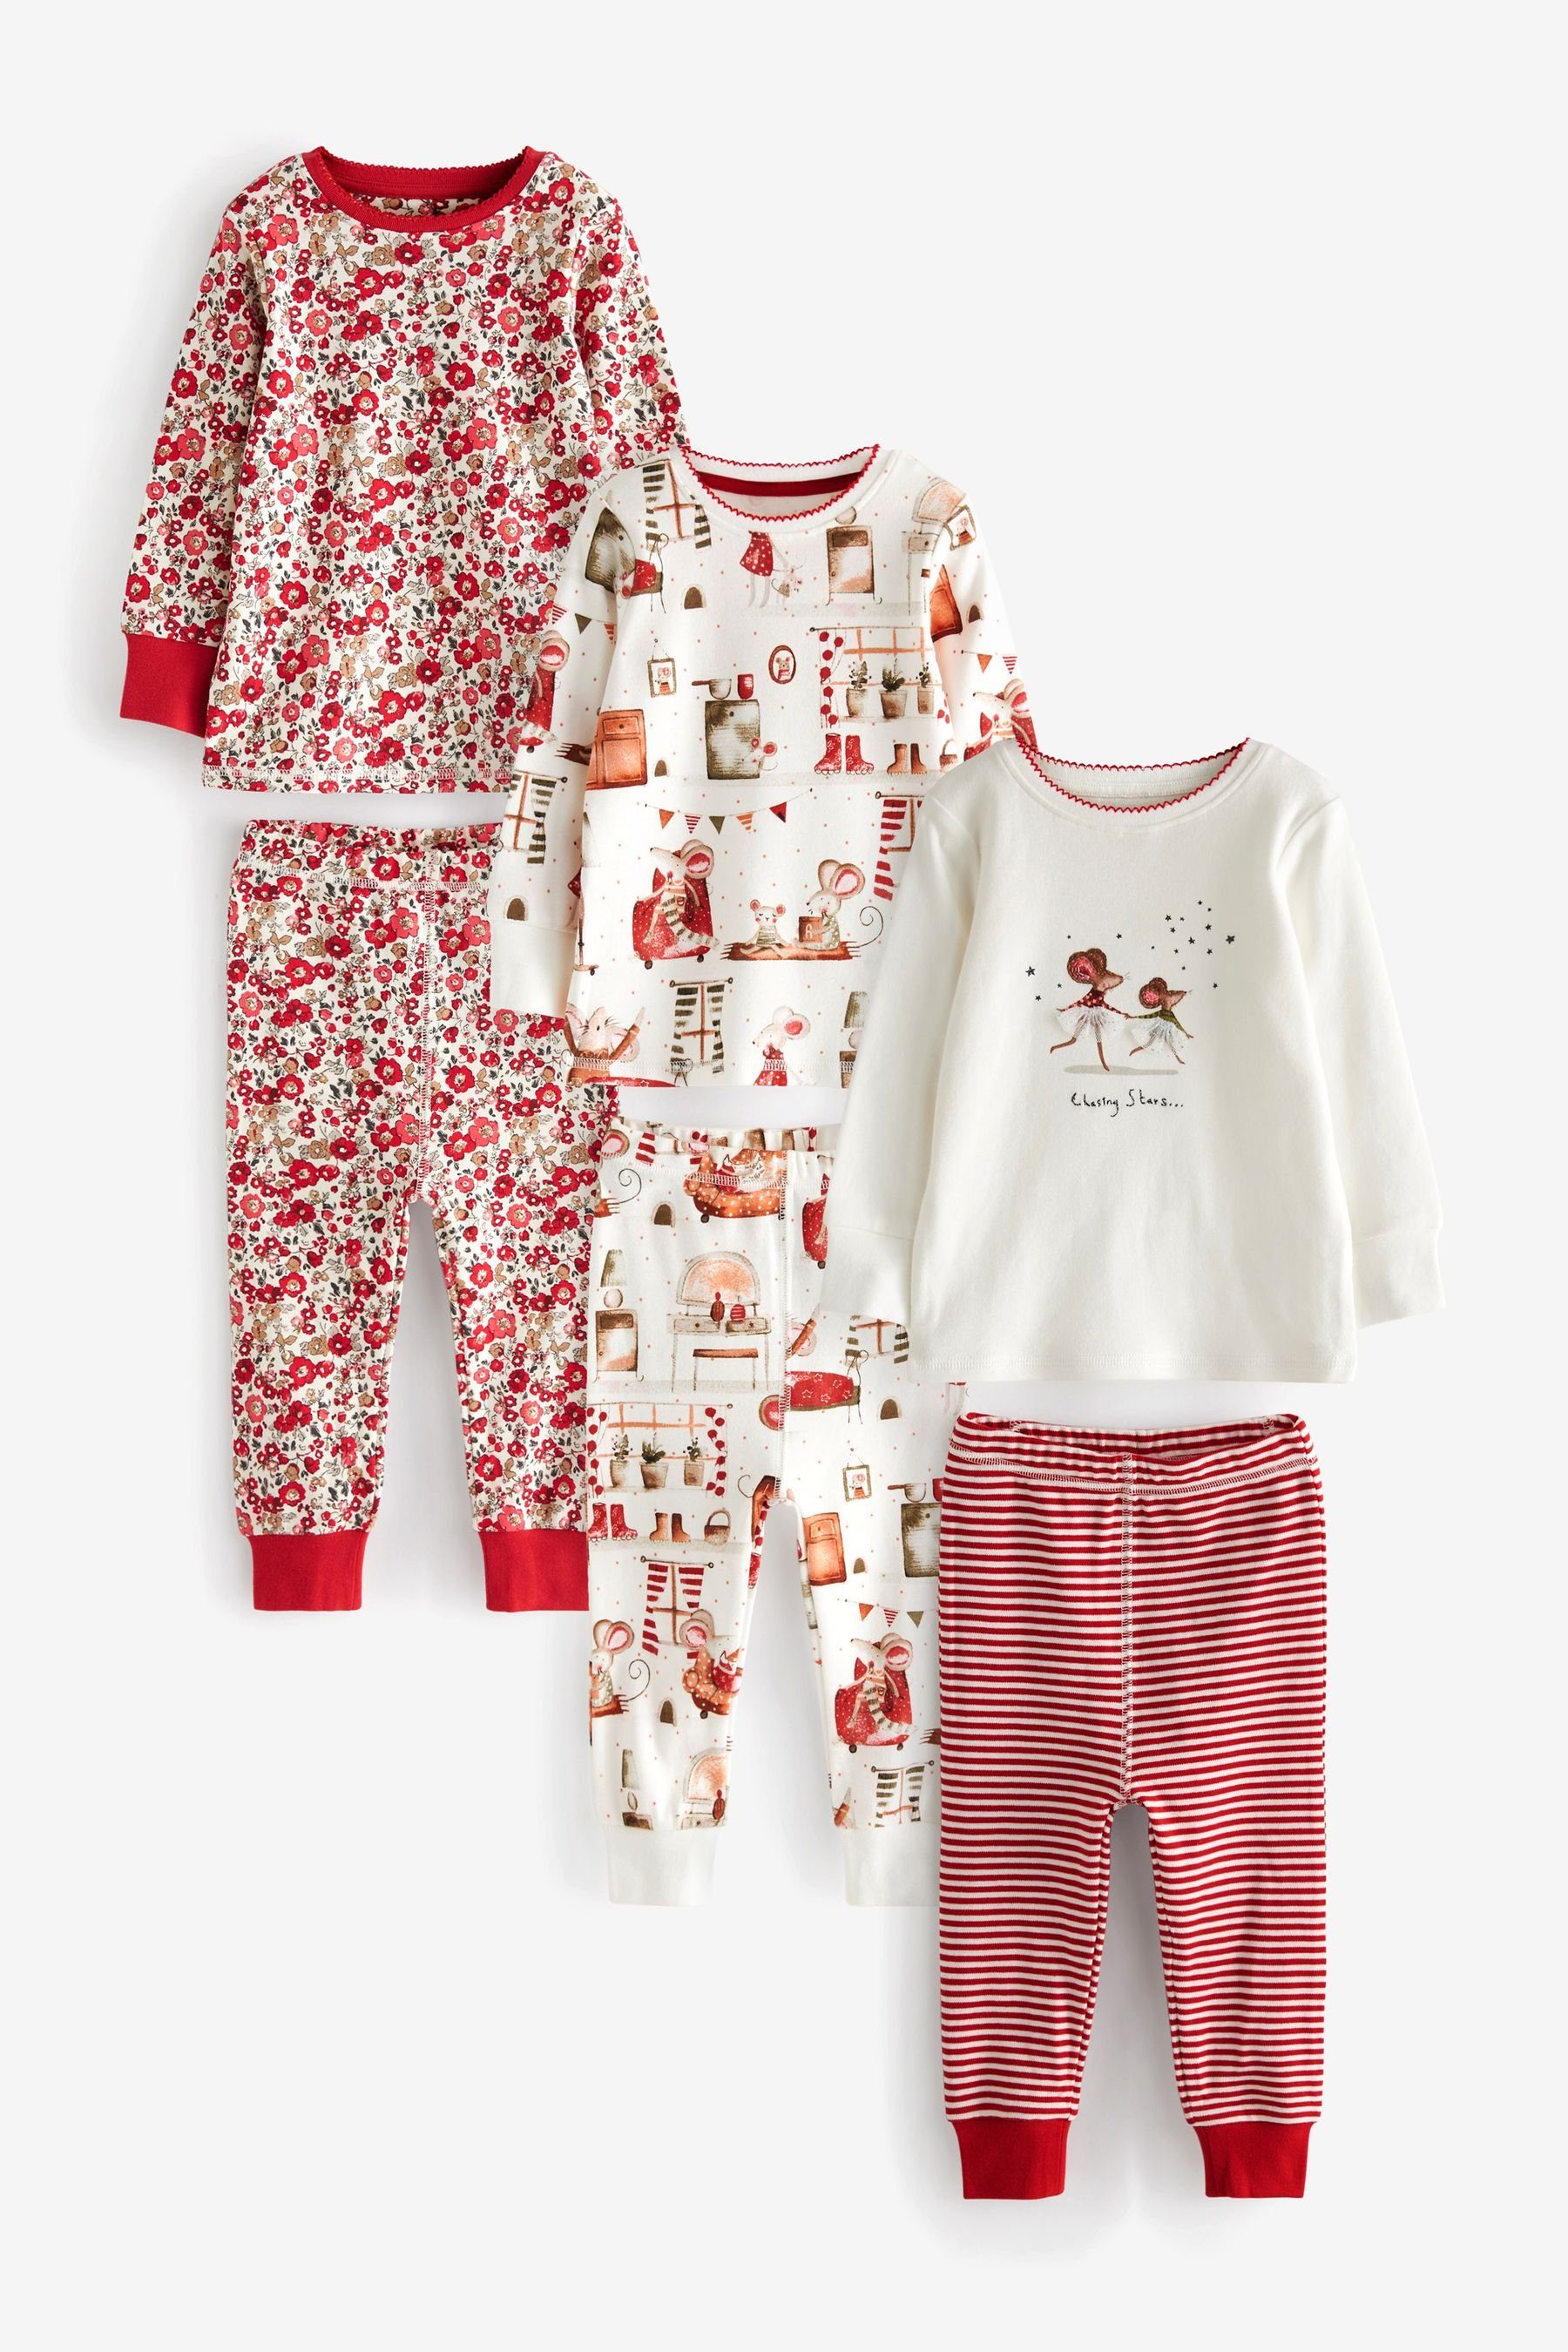 Next Pyjama tlg) (6 im 3er-Pack Pyjamas Red/Cream Mouse